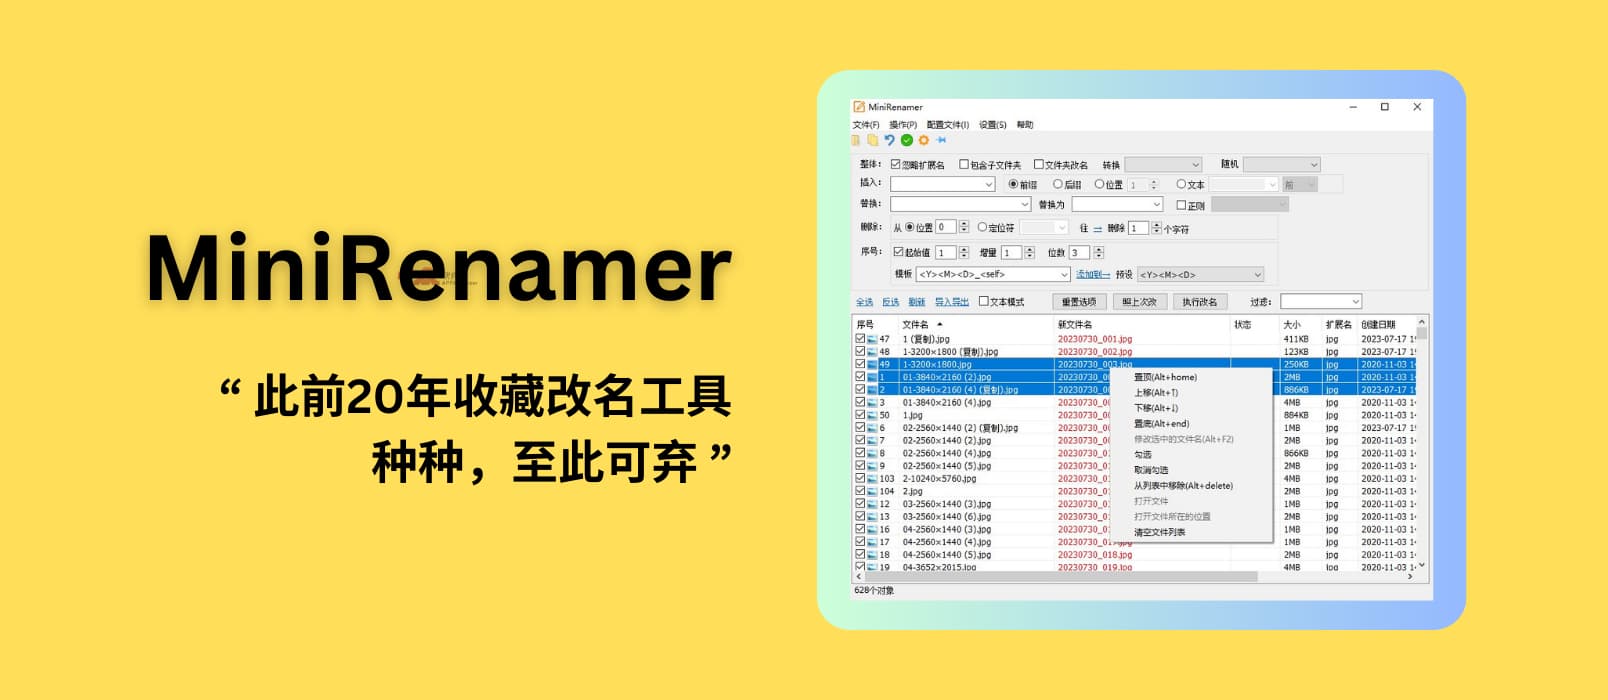 MiniRenamer - 支持实时预览的批量重命名工具，用户：此前20年收藏改名工具种种，至此可弃